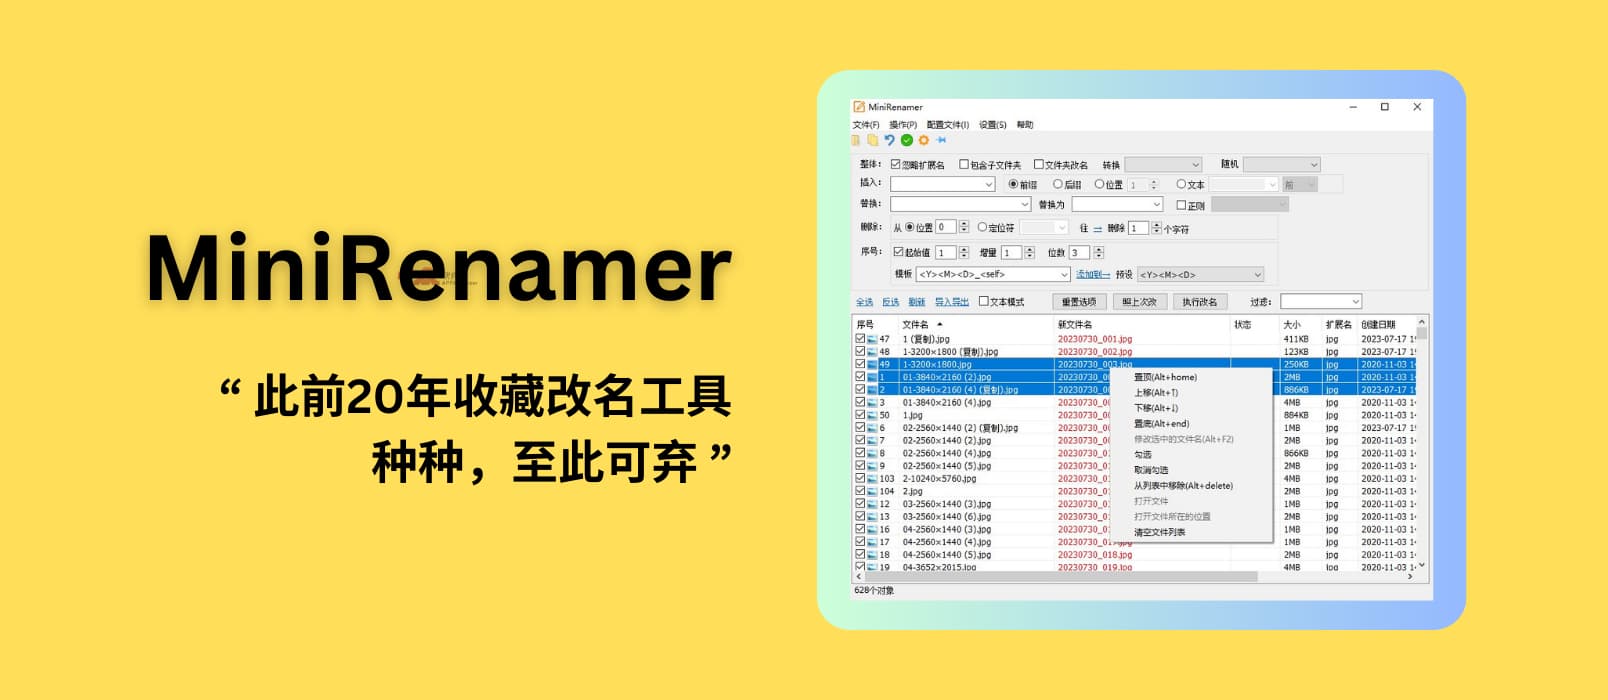 MiniRenamer - 支持实时预览的批量重命名工具，用户：此前20年收藏改名工具种种，至此可弃